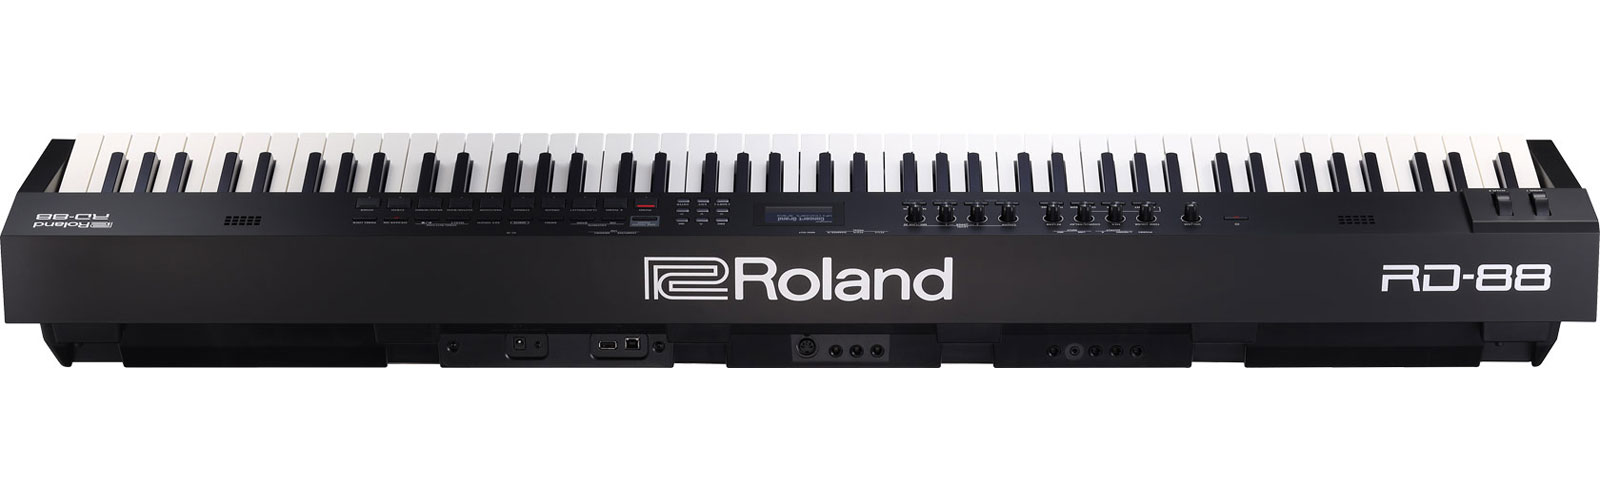 Roland Rd-88 - Stage keyboard - Variation 4